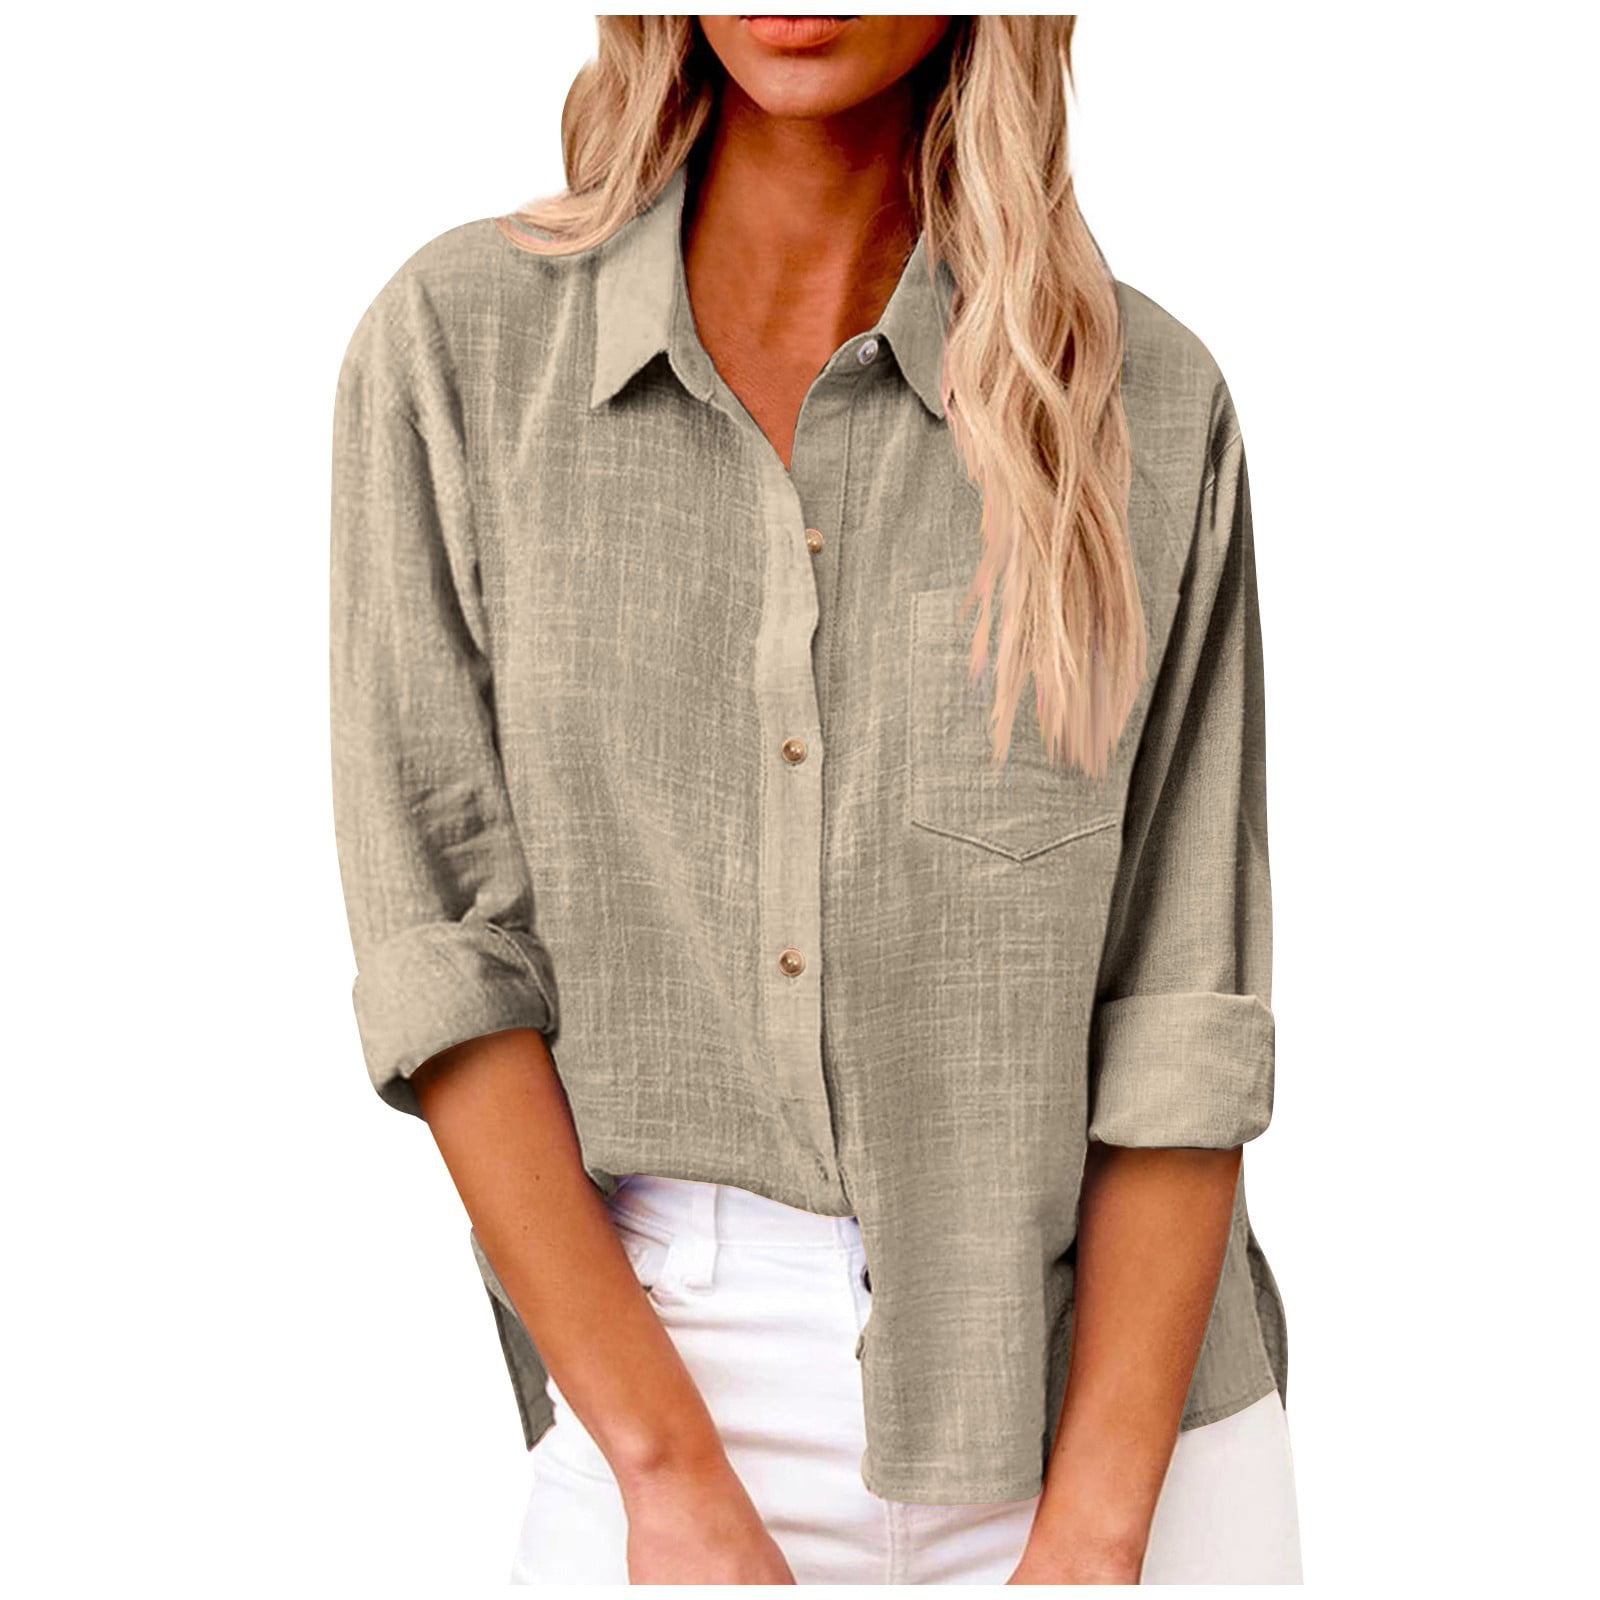 Kddylitq Summer Button Down Shirts for Women Cotton Linen Collared Tops ...